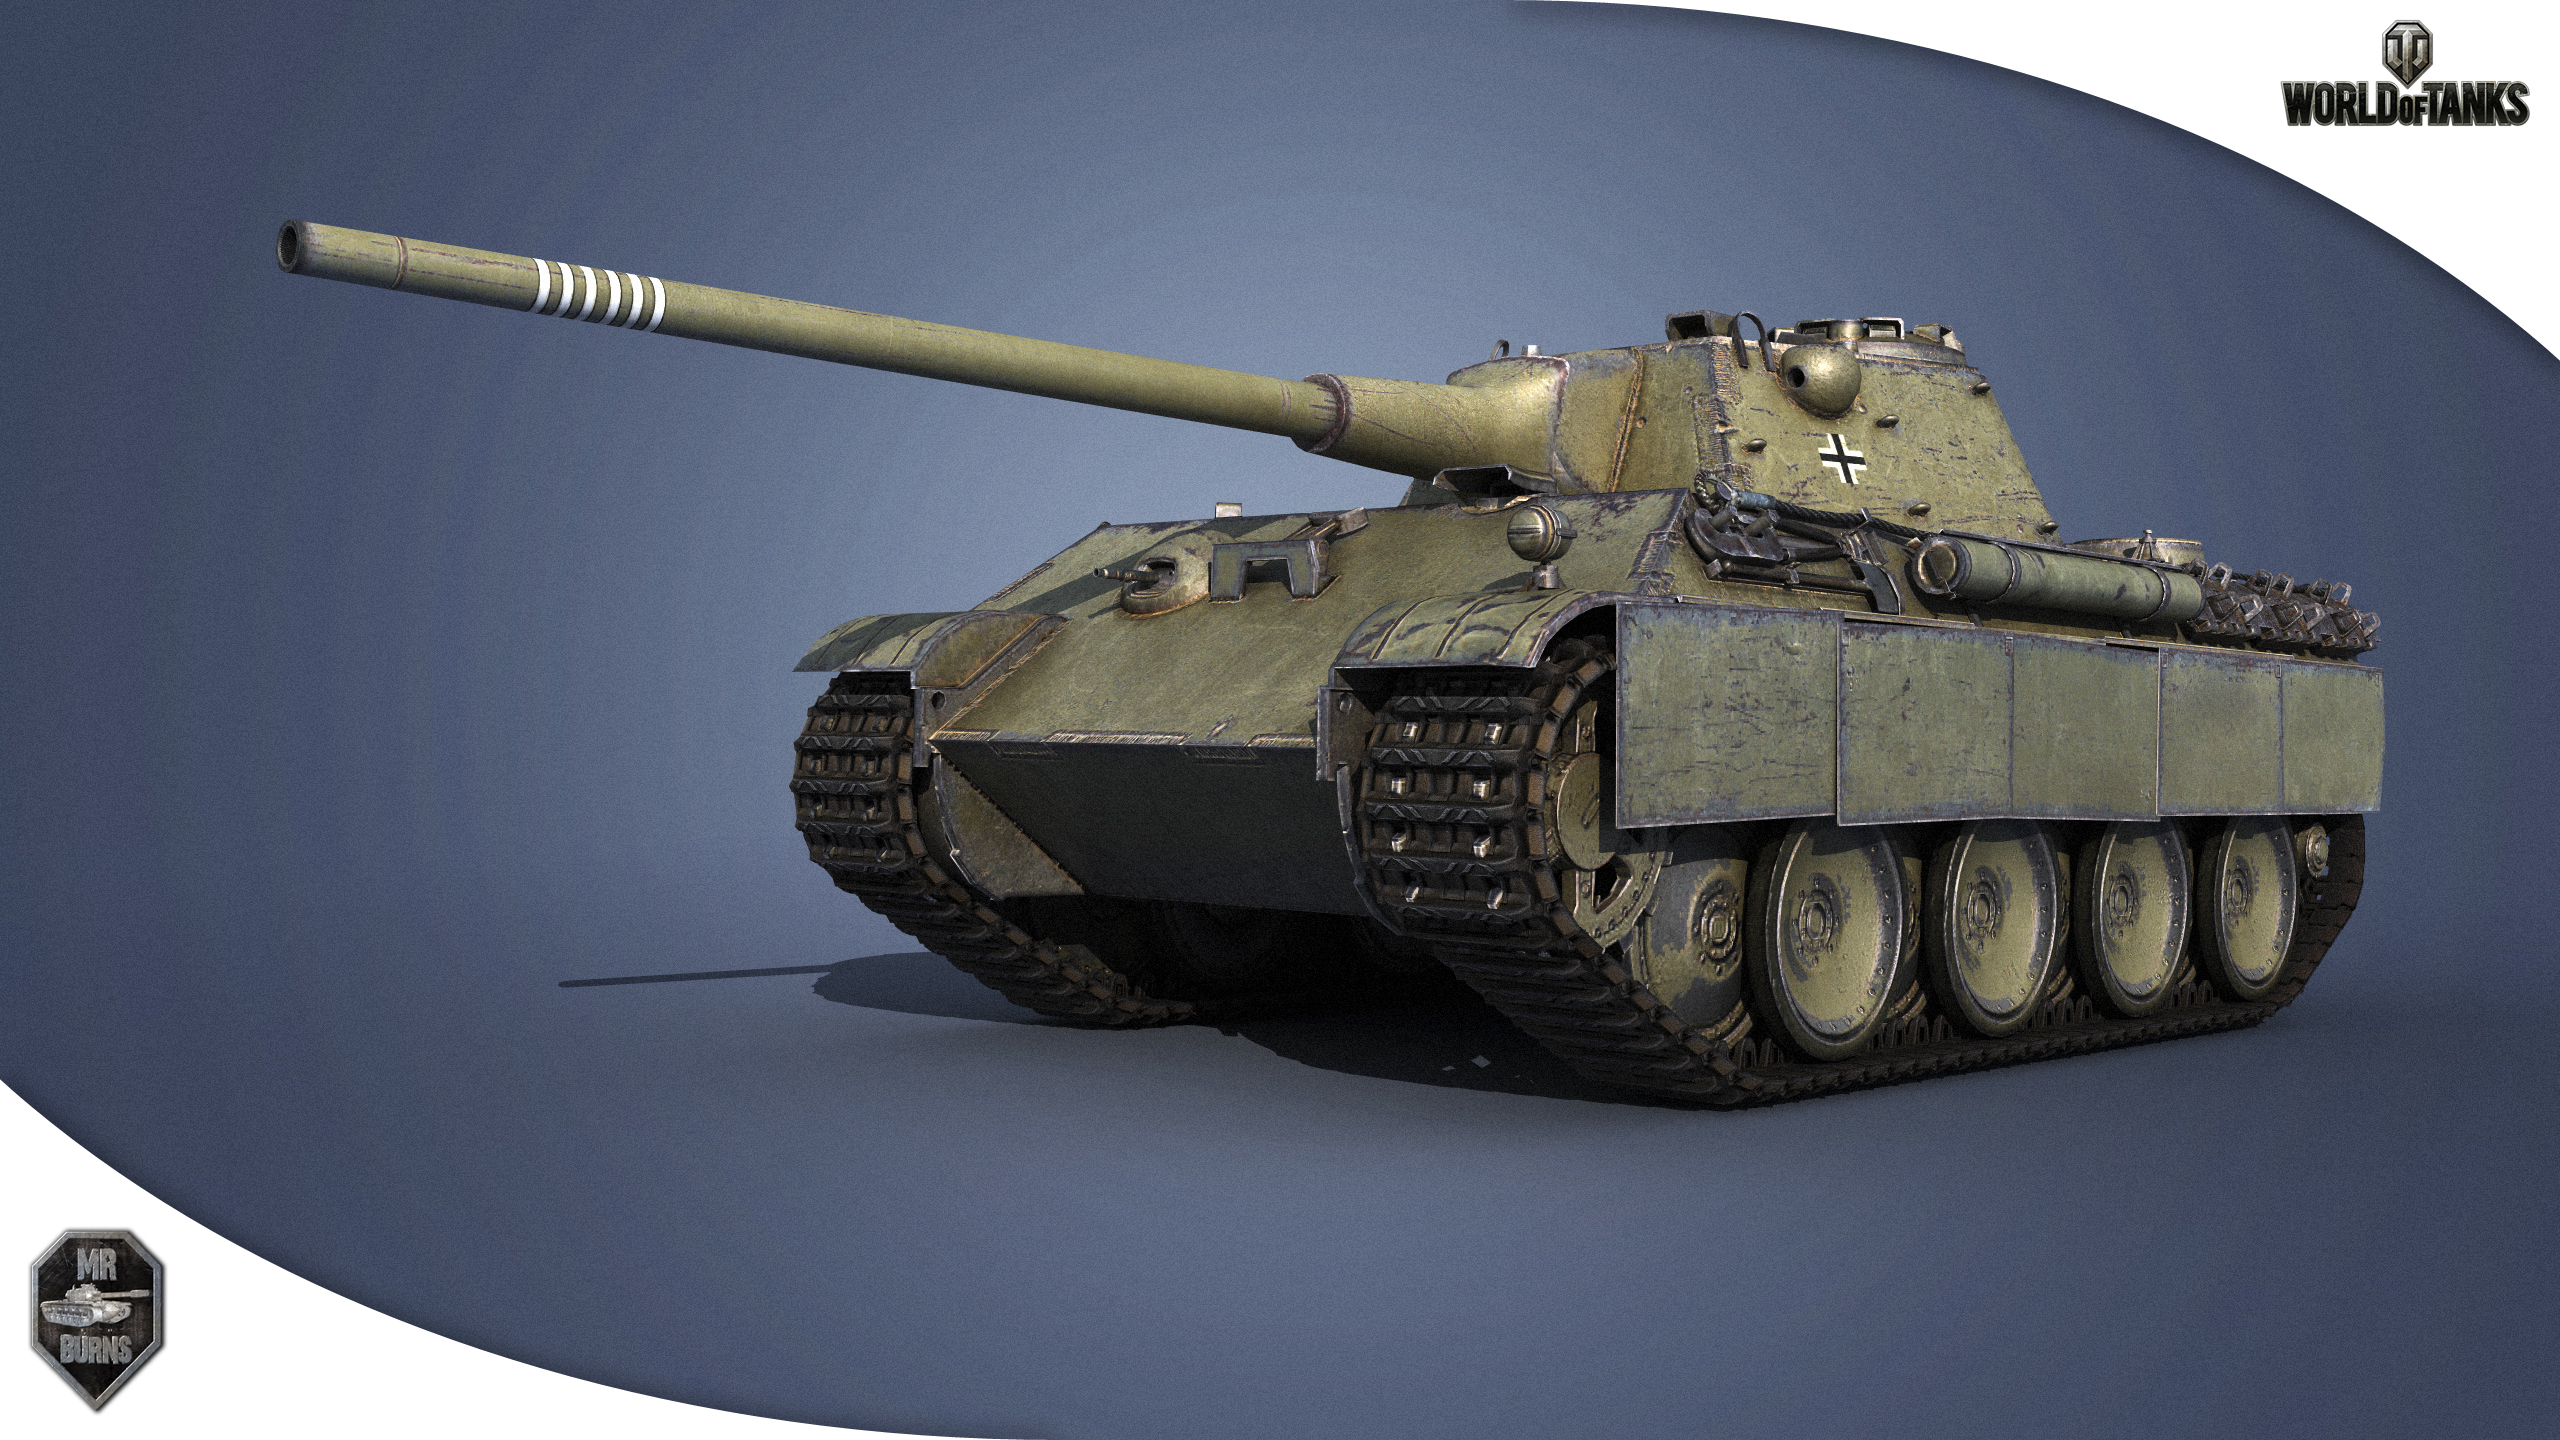 World of Tanks Танки Panther mit 8,8 cm L.71 Игры 3D Графика фото 3д, компь...